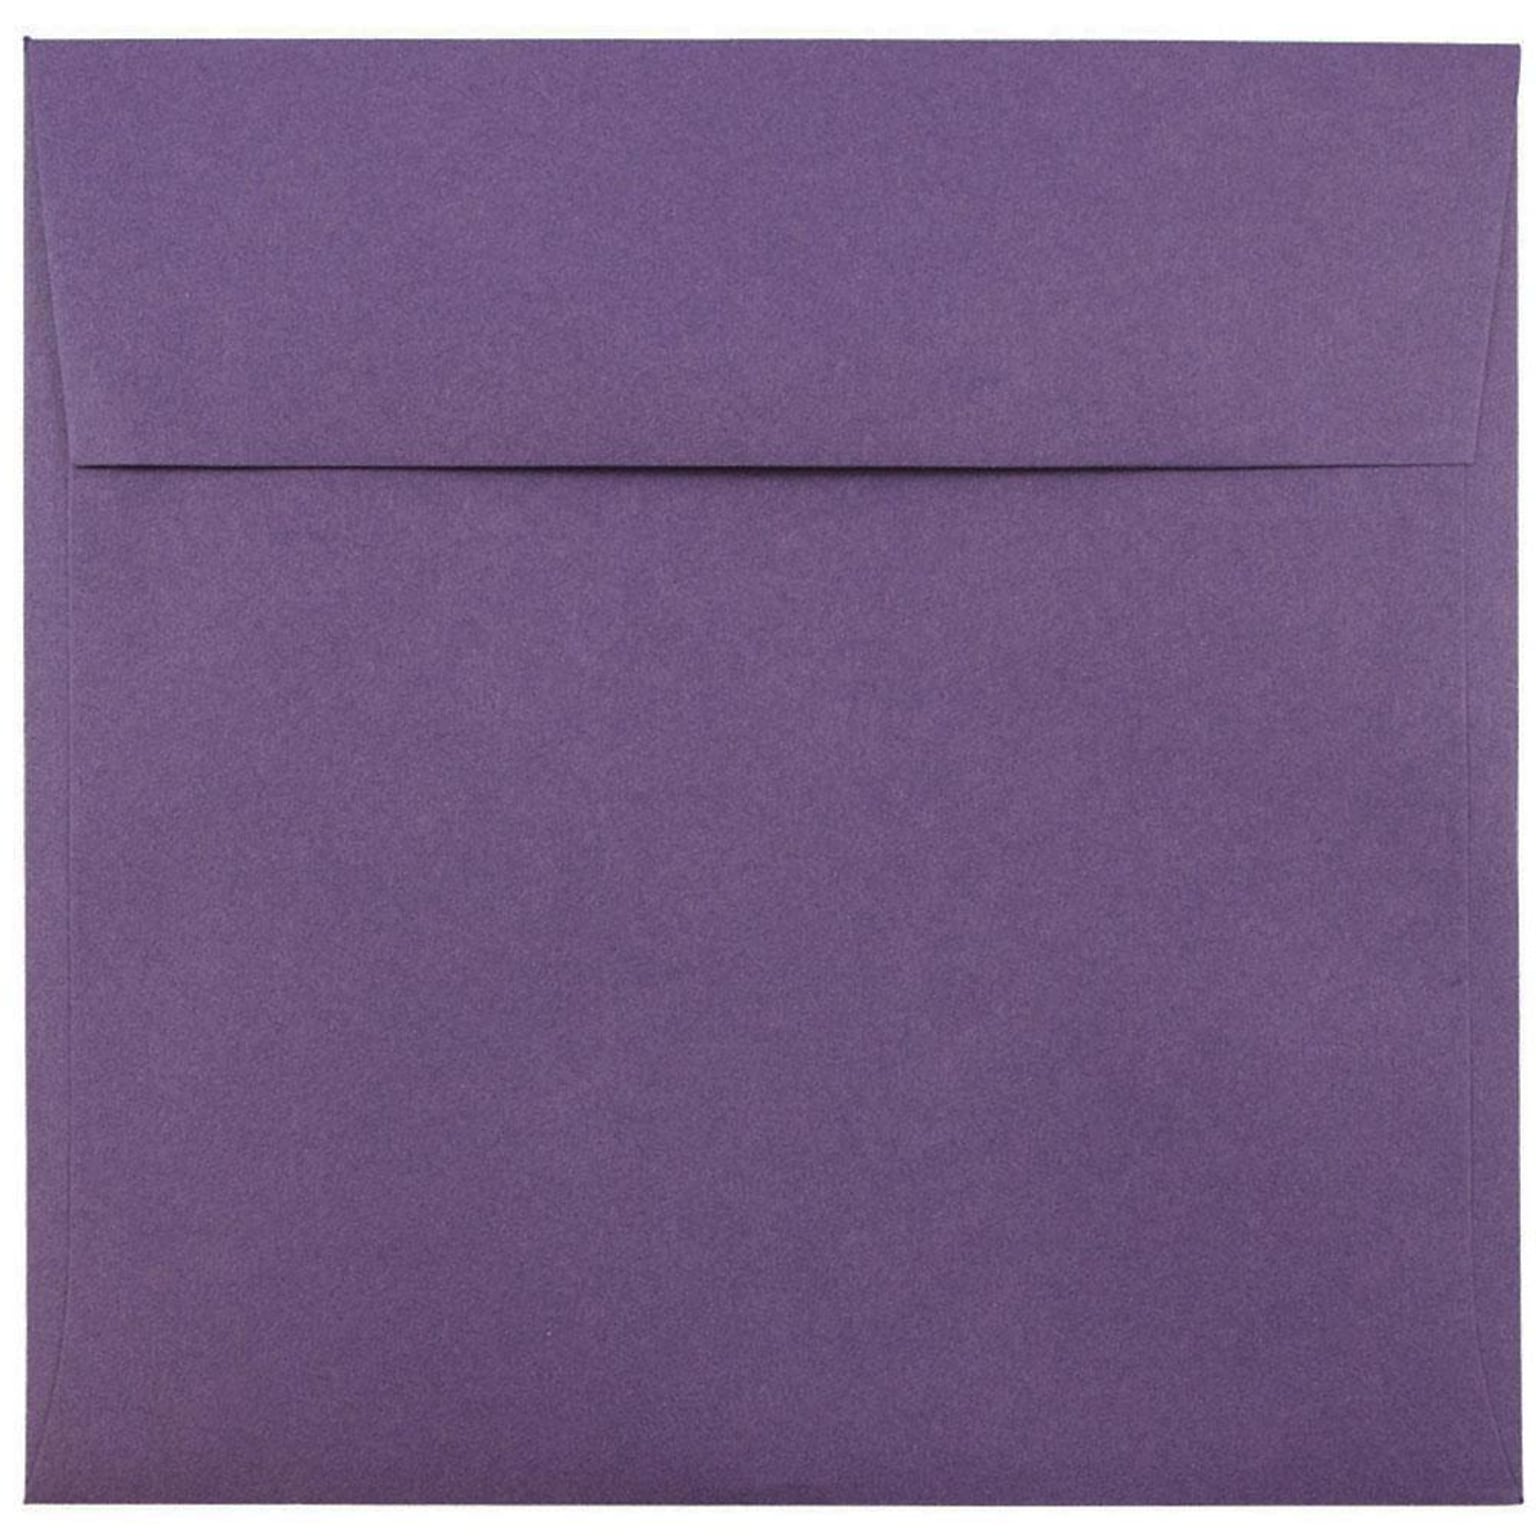 JAM Paper 8.5 x 8.5 Square Invitation Envelopes, Dark Purple, 50/Pack (563912527I)